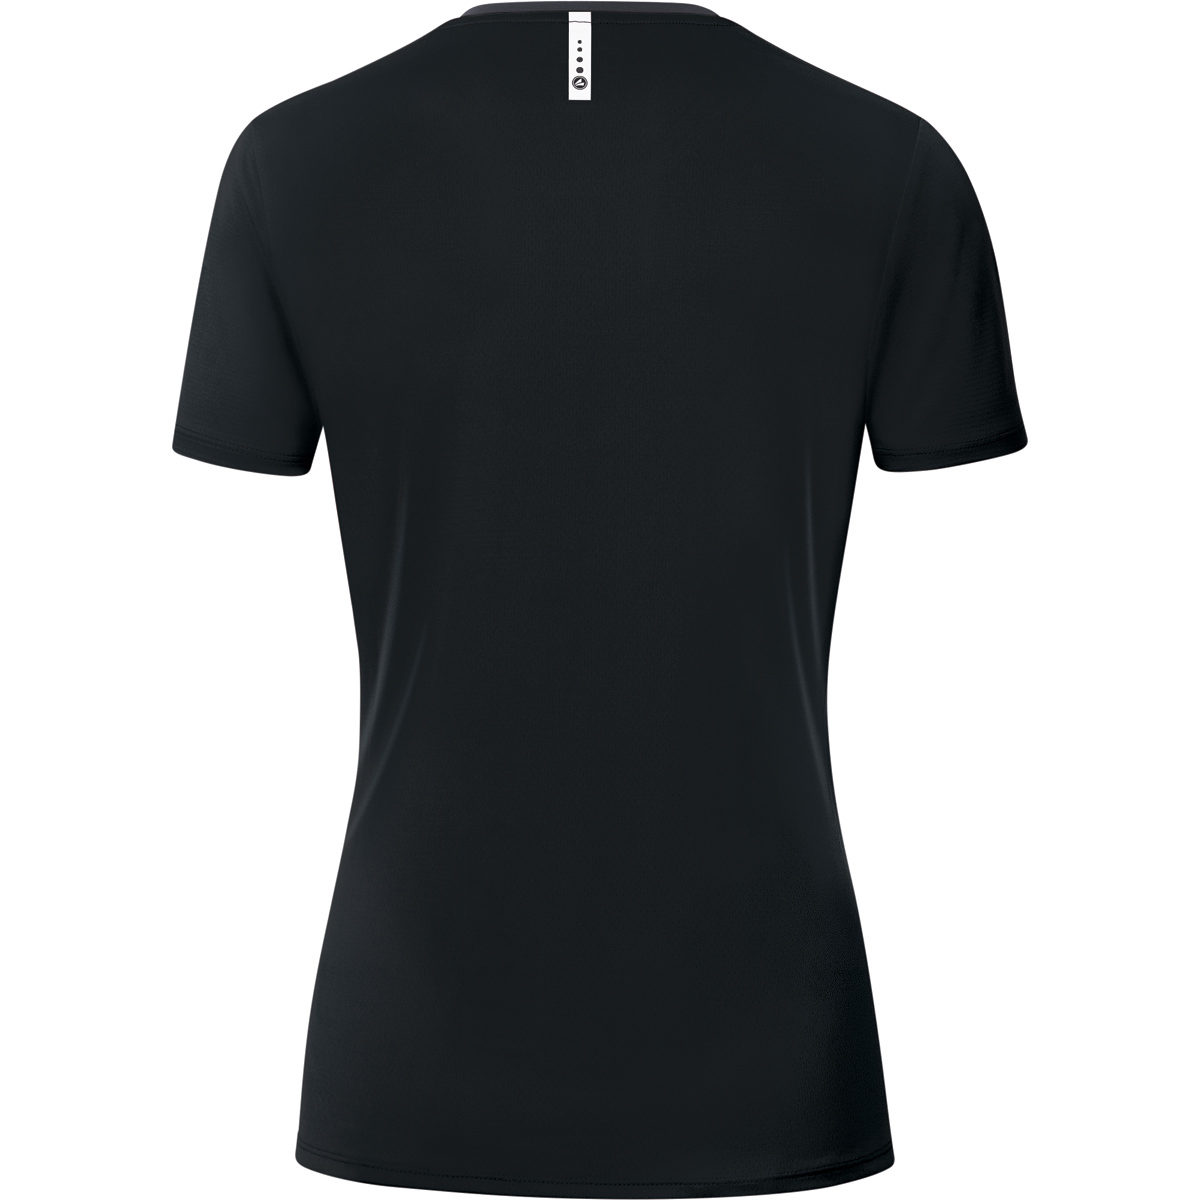 6120 T-Shirt 38, Champ Damen, schwarz/anthrazit, JAKO Gr. 2.0